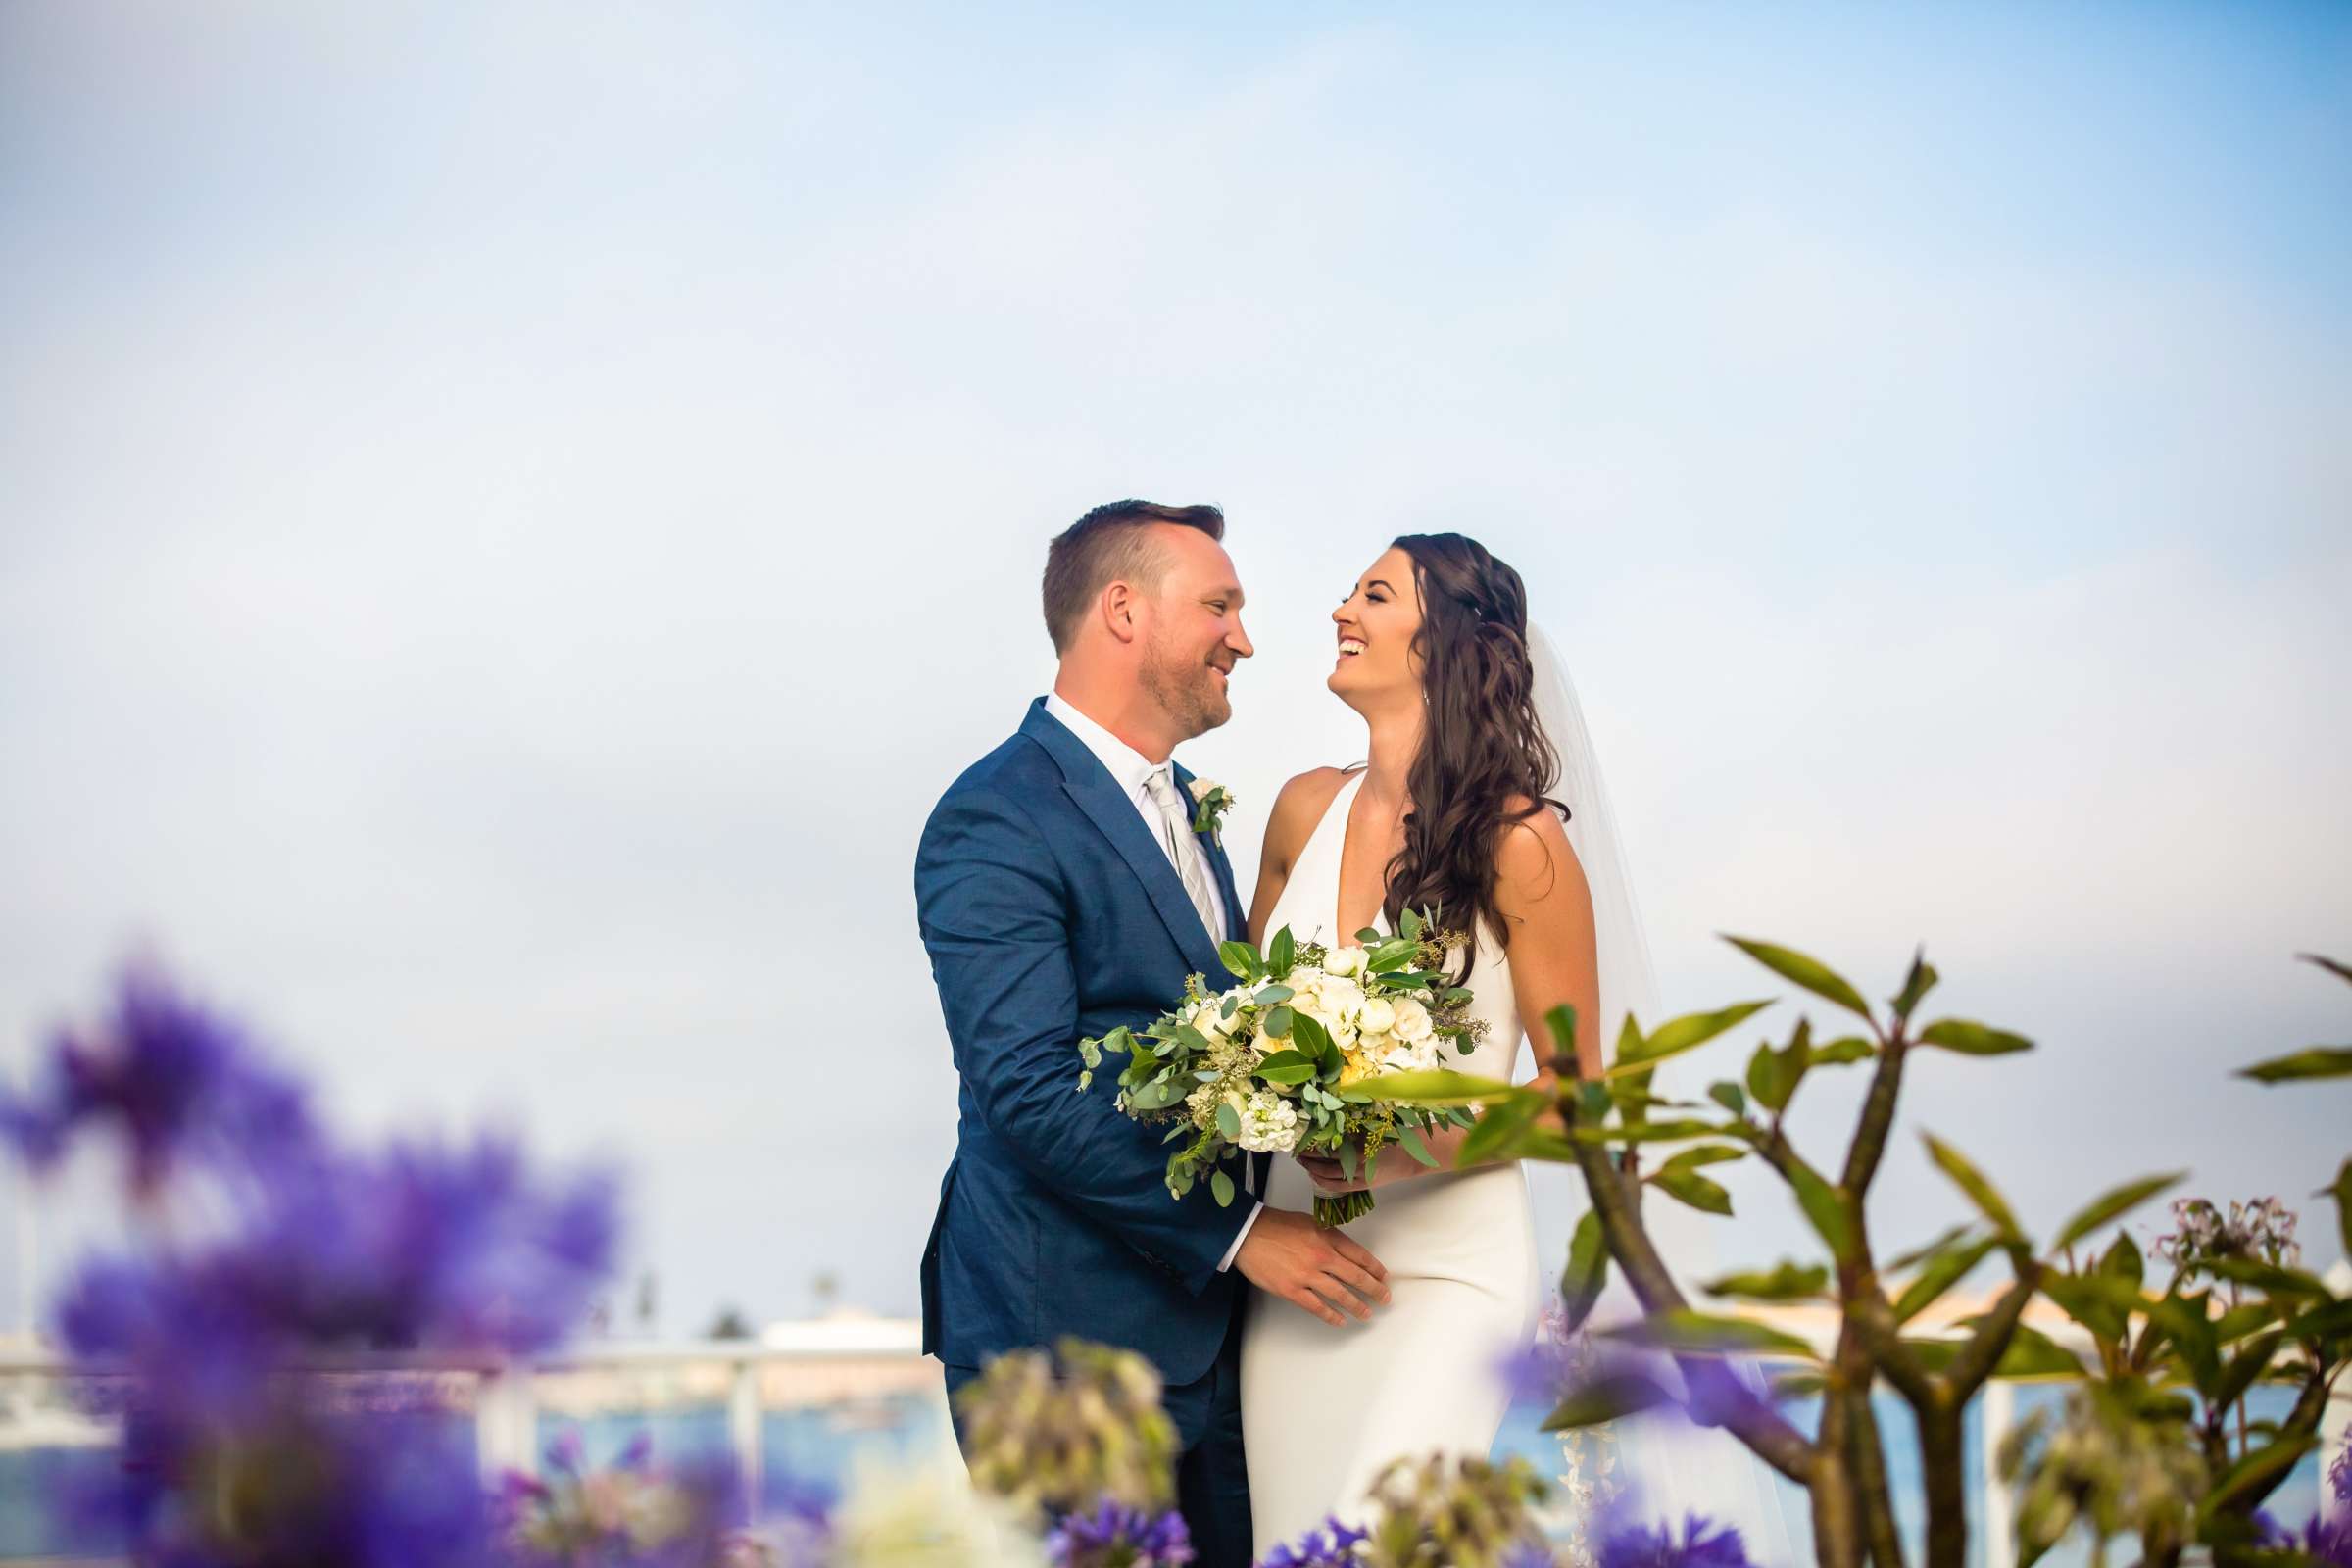 Coronado Community Center Wedding coordinated by Breezy Day Weddings, Cheryl and Tim Wedding Photo #14 by True Photography